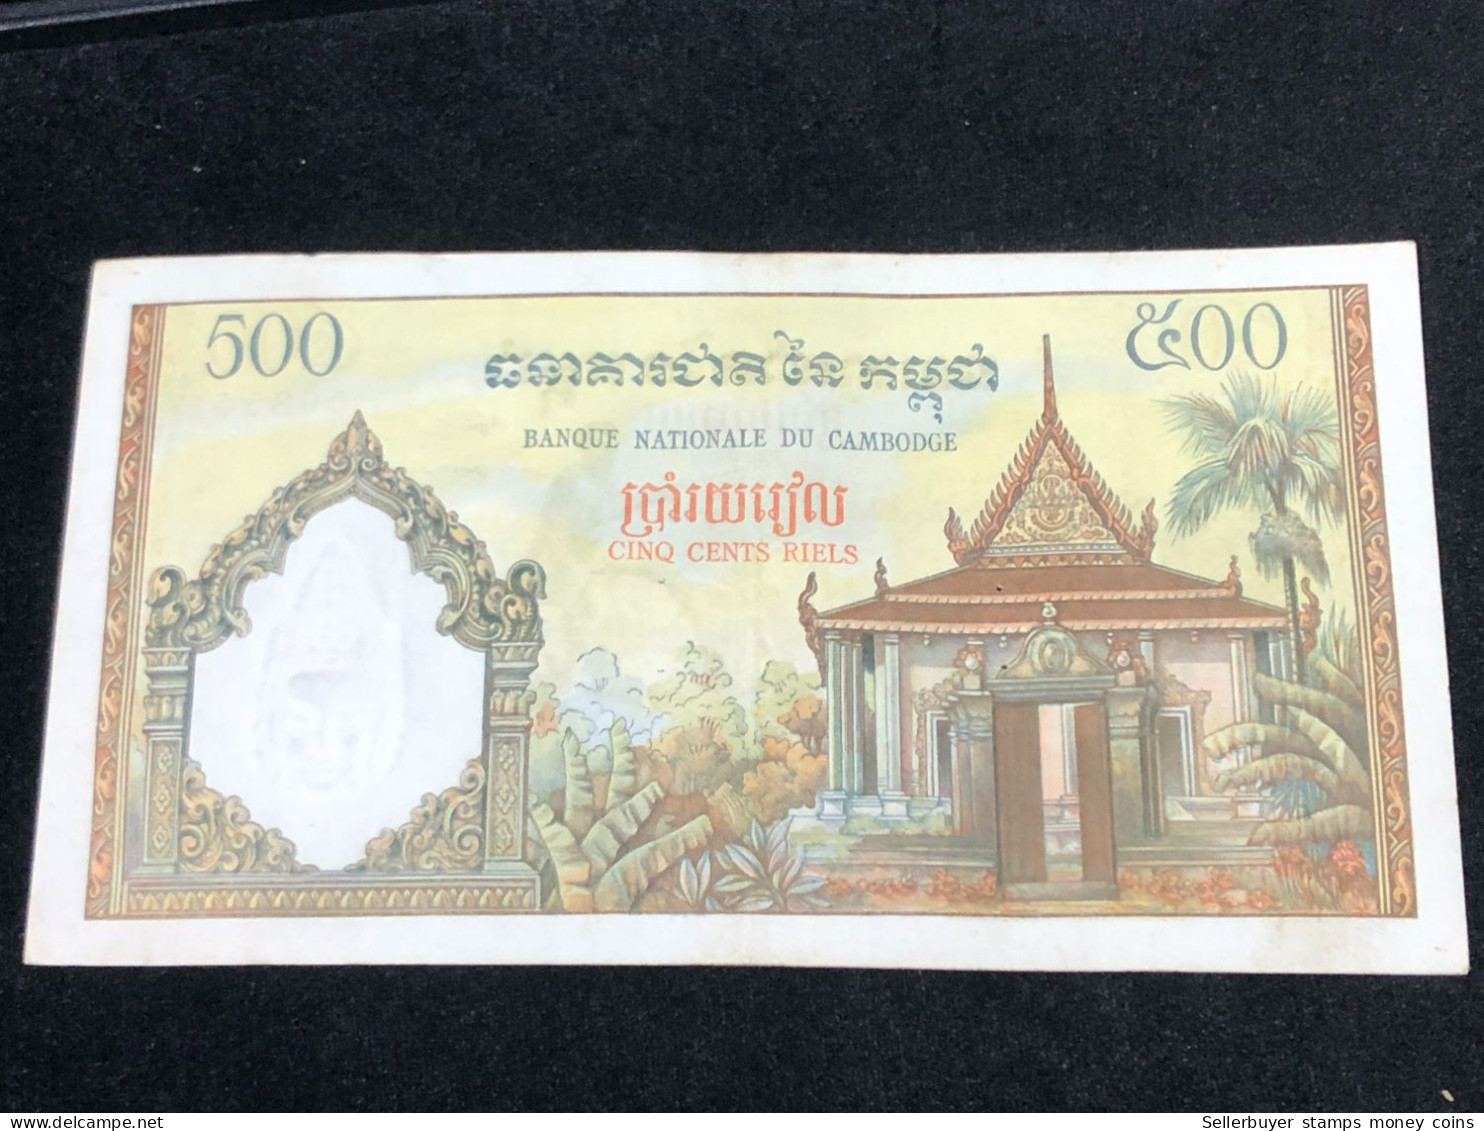 cambodia kingdom banknotes #16D-500 riels 1956-1 pcs aunc very rare-number-6854